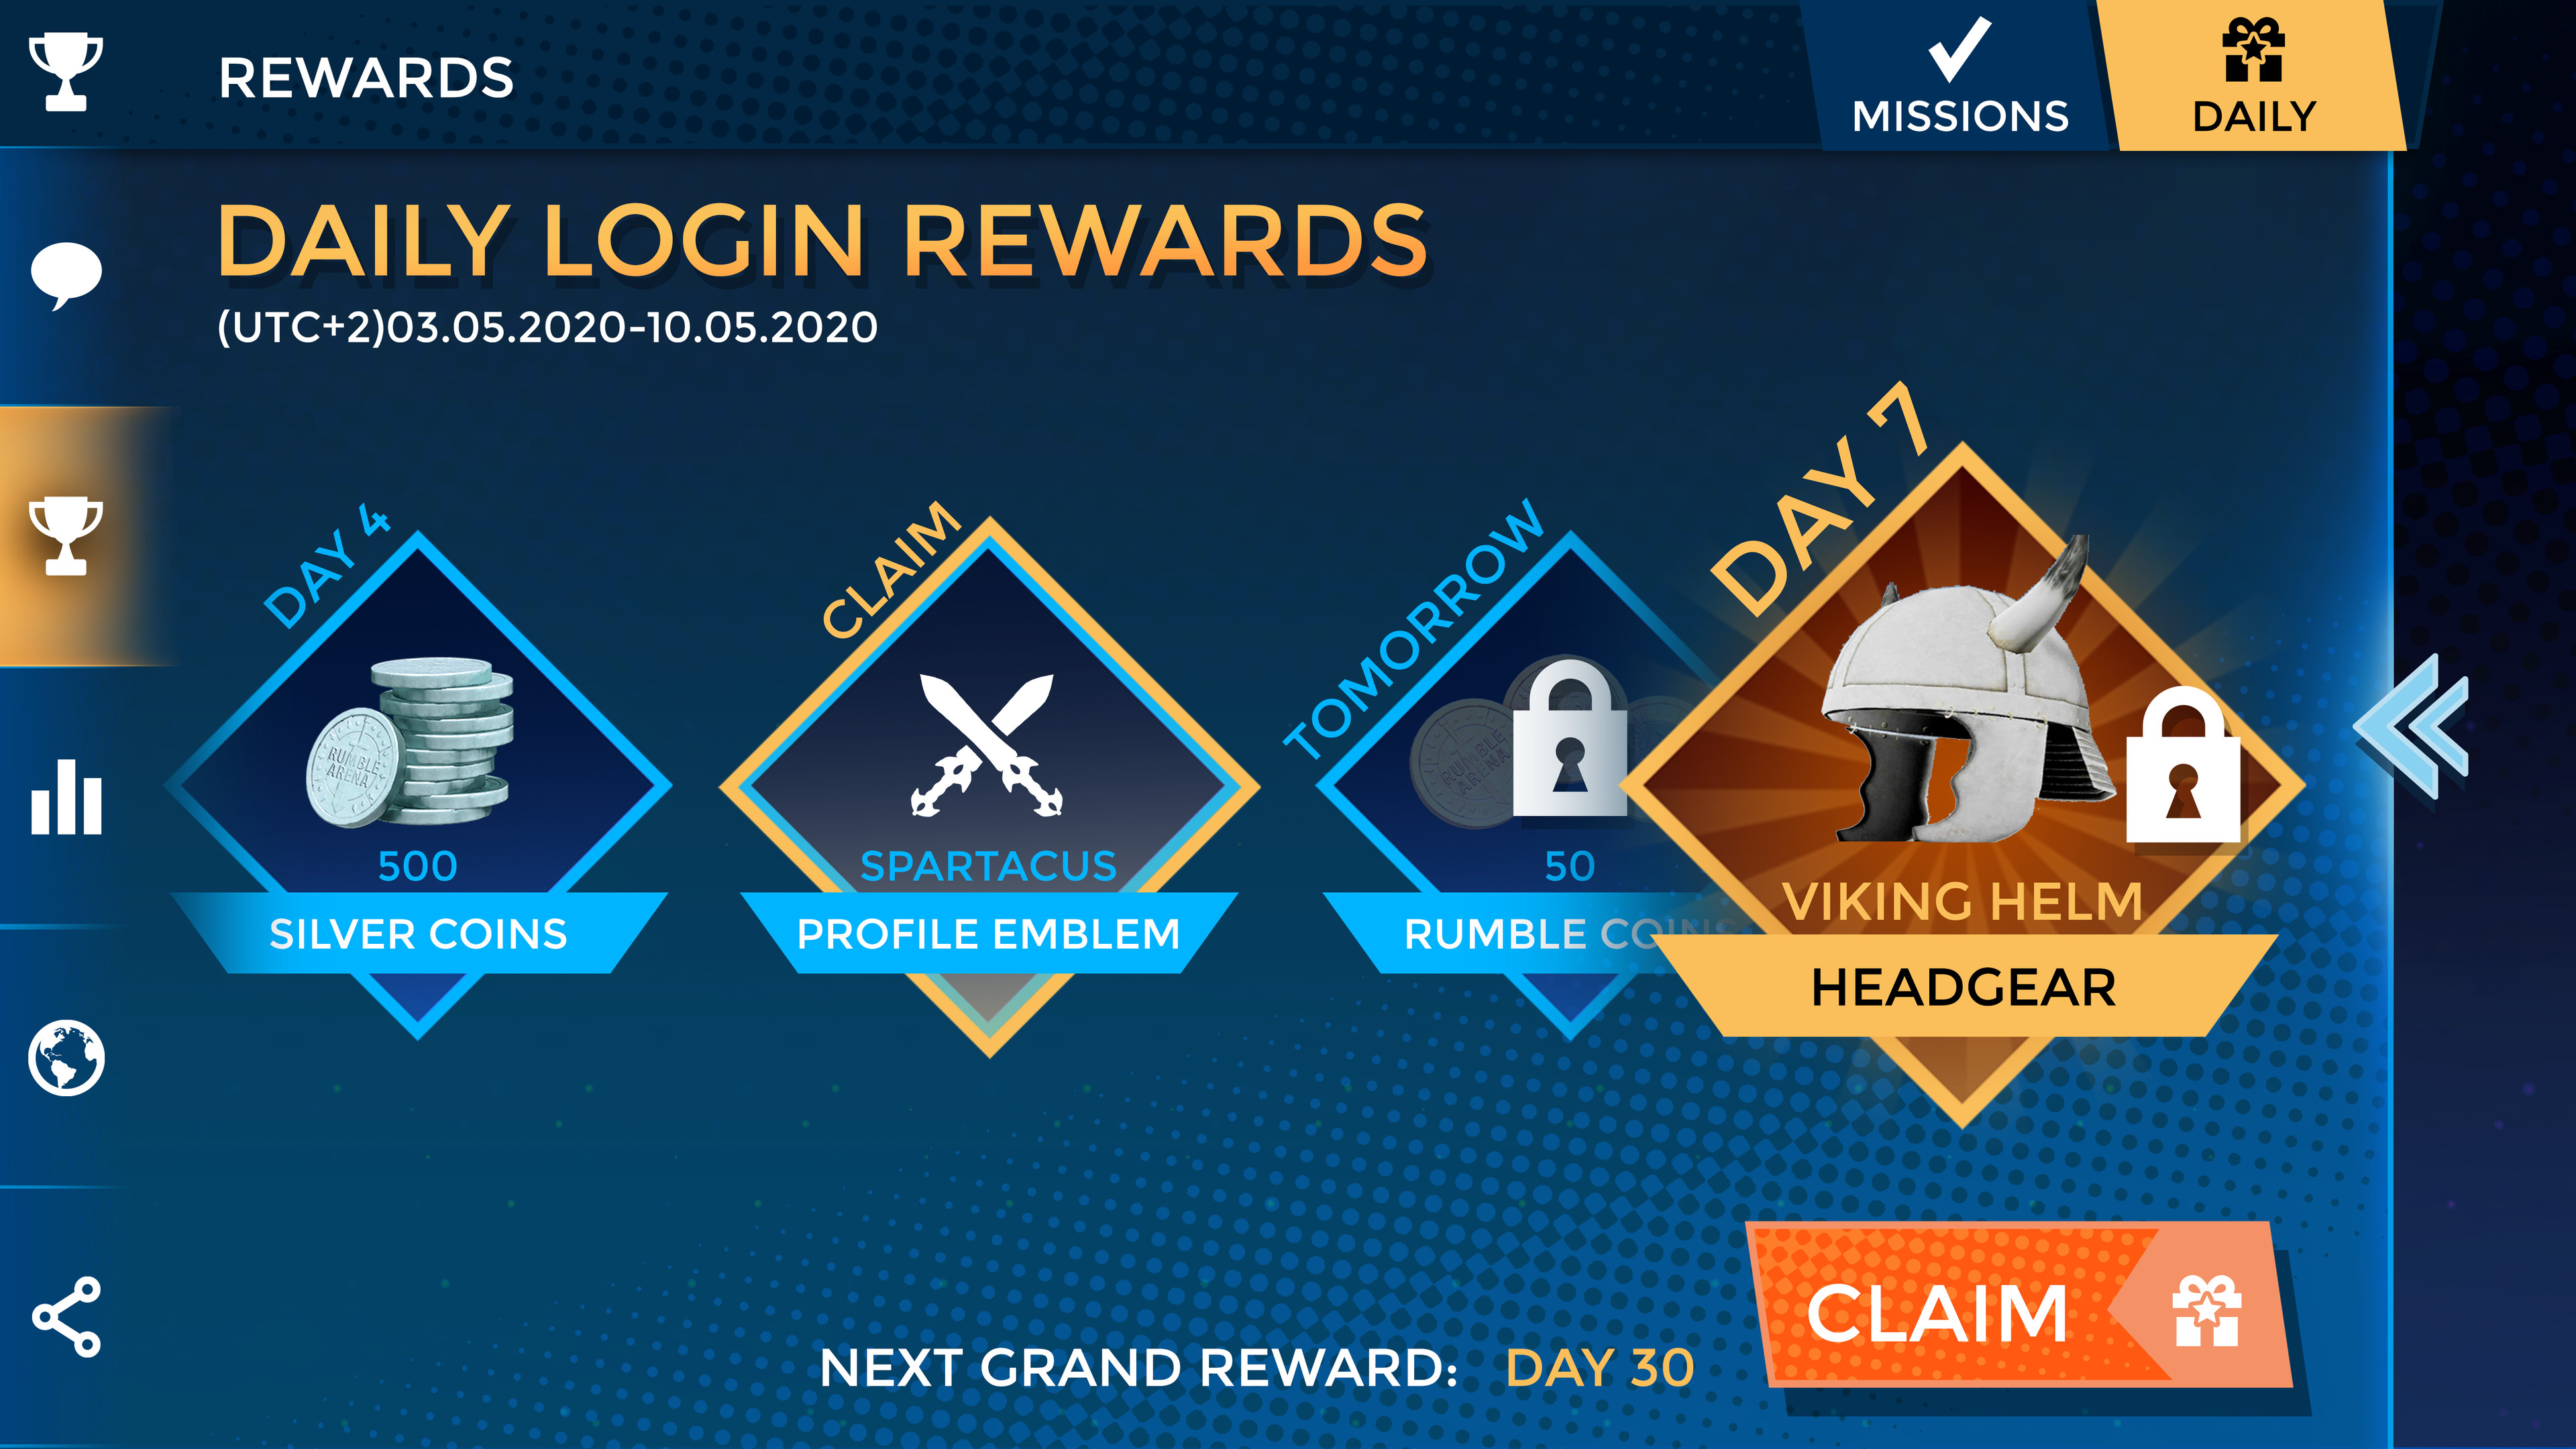 Daily login rewards screen